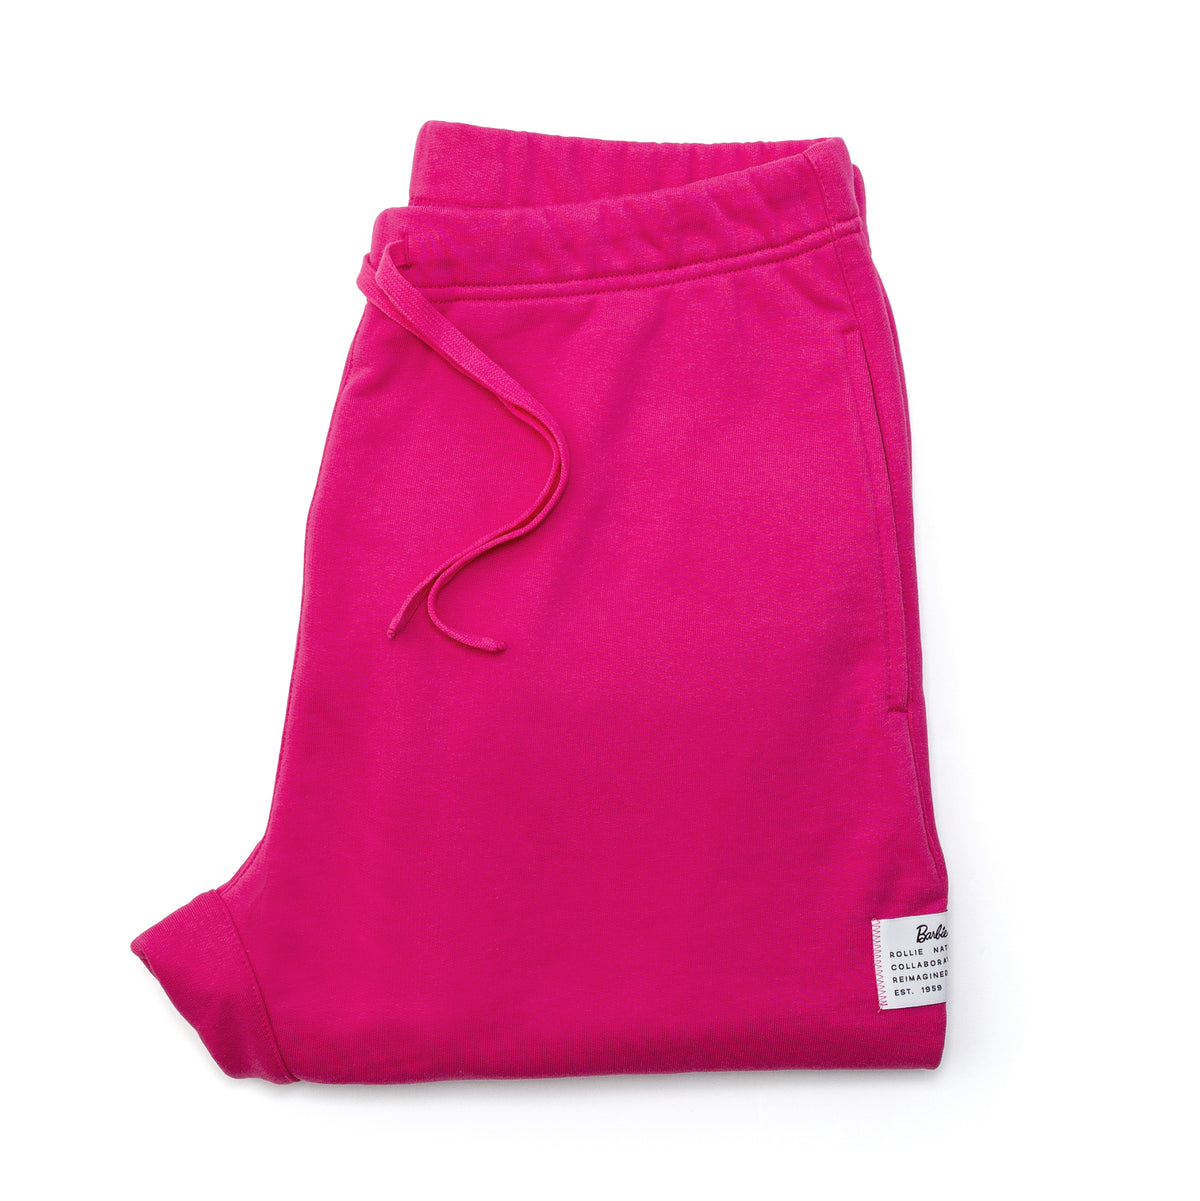 Rollie x Barbie Mens Pink Sweat Pants